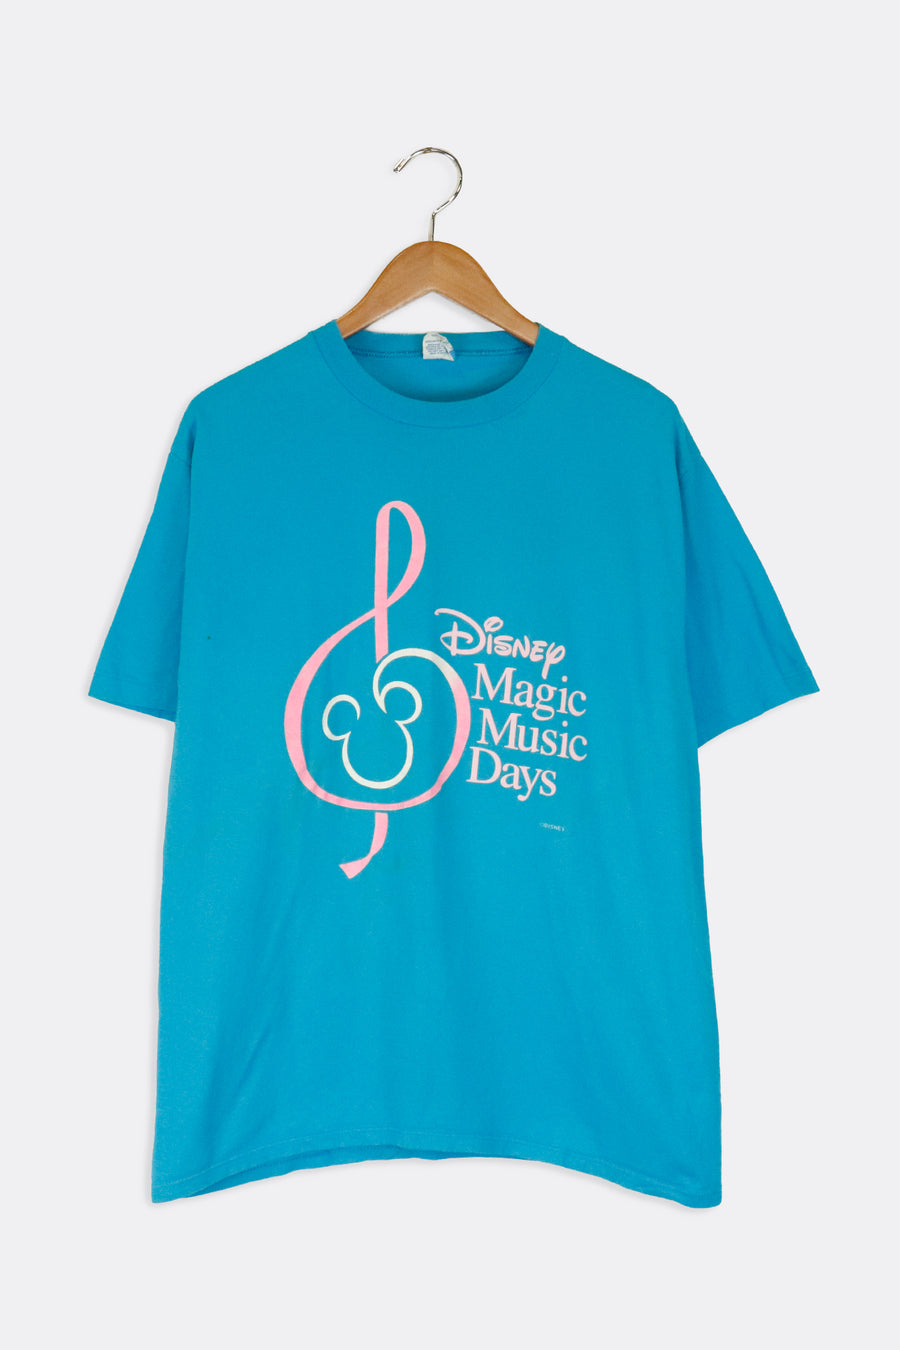 Vintage Disney Magic Music Days Music Note Graphic T Shirt Sz O/S